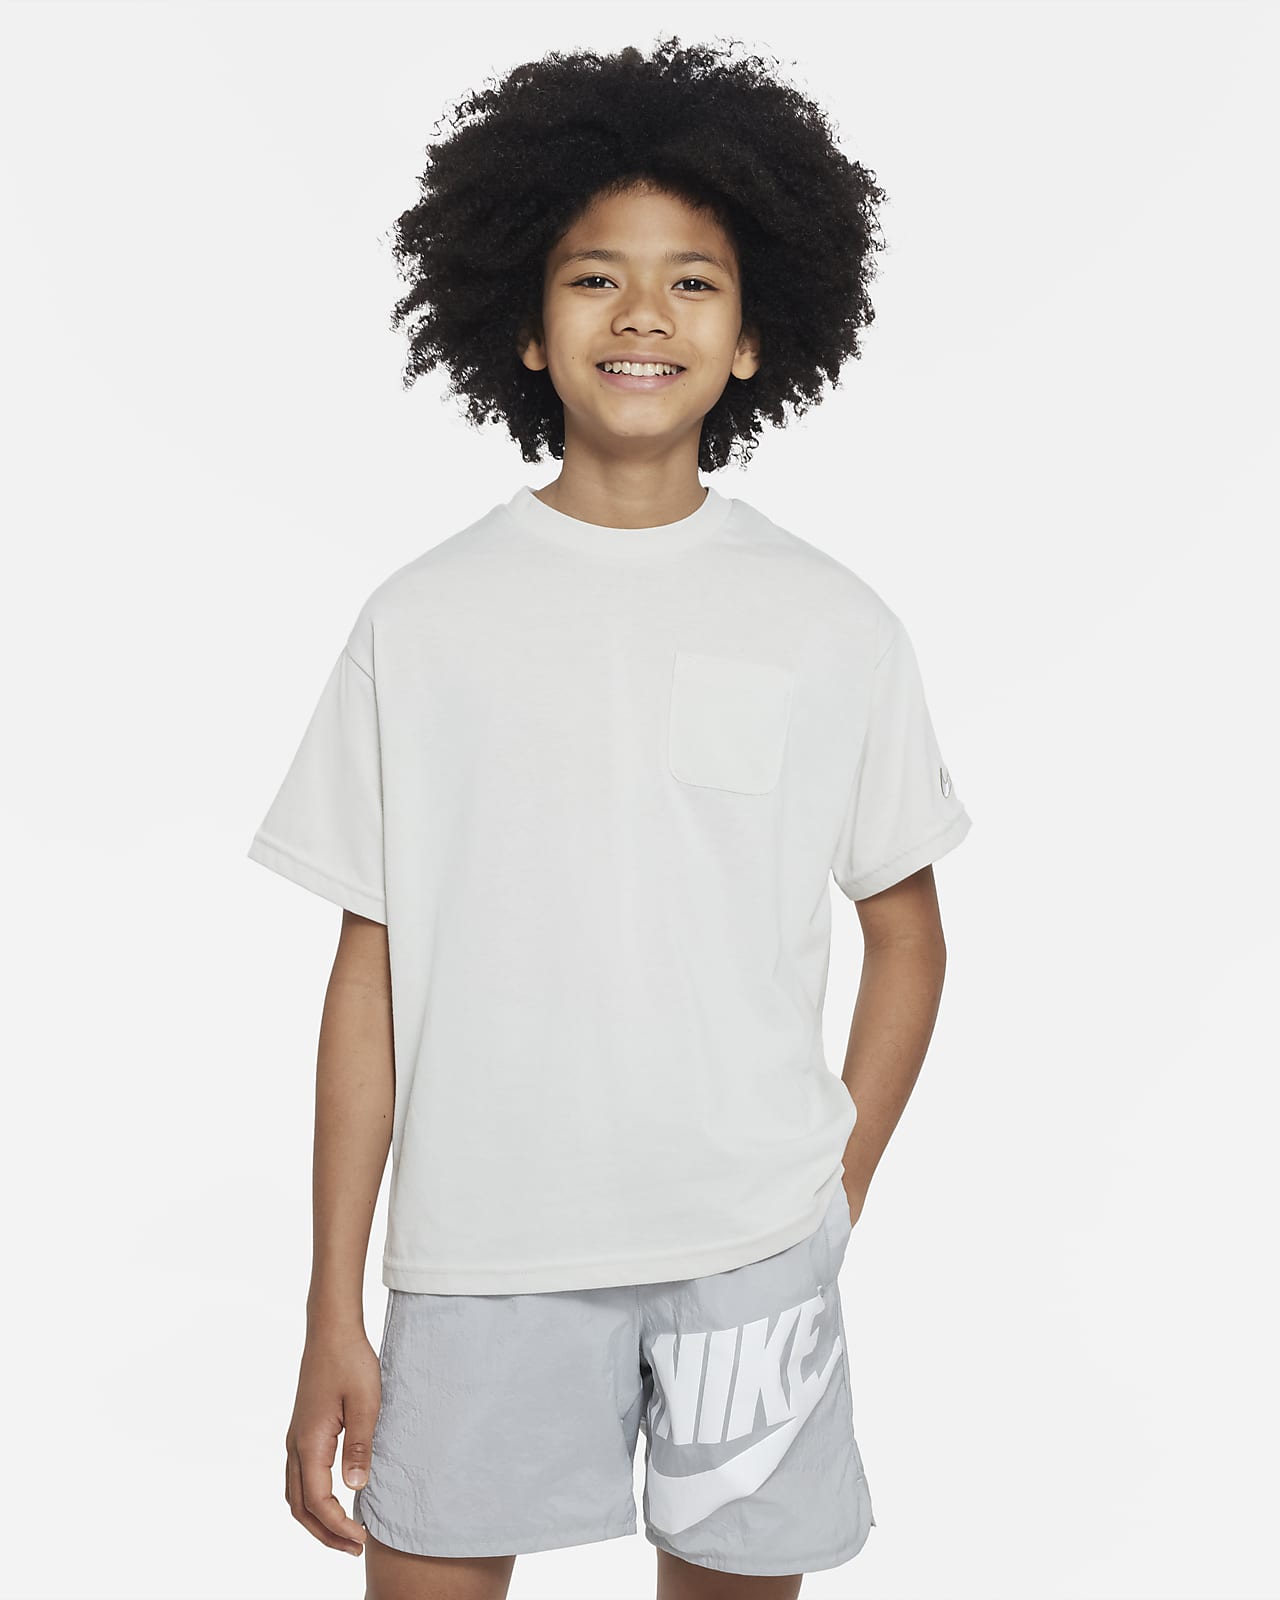 Nike Outdoor Play Big Short-Sleeve Top. Kids